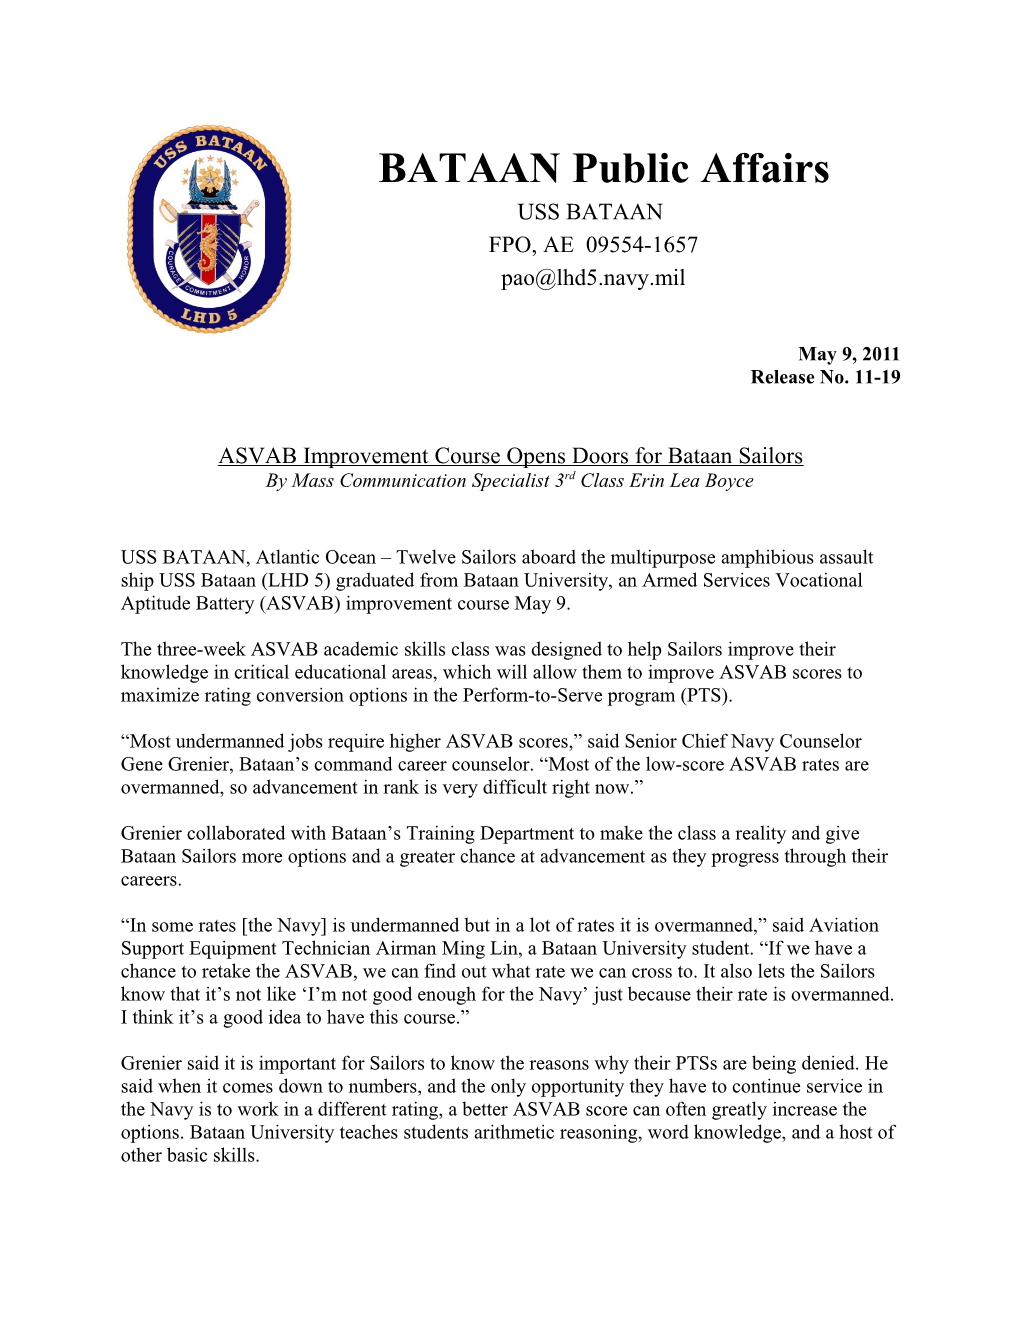 ASVAB Improvement Course Opens Doors for Bataan Sailors